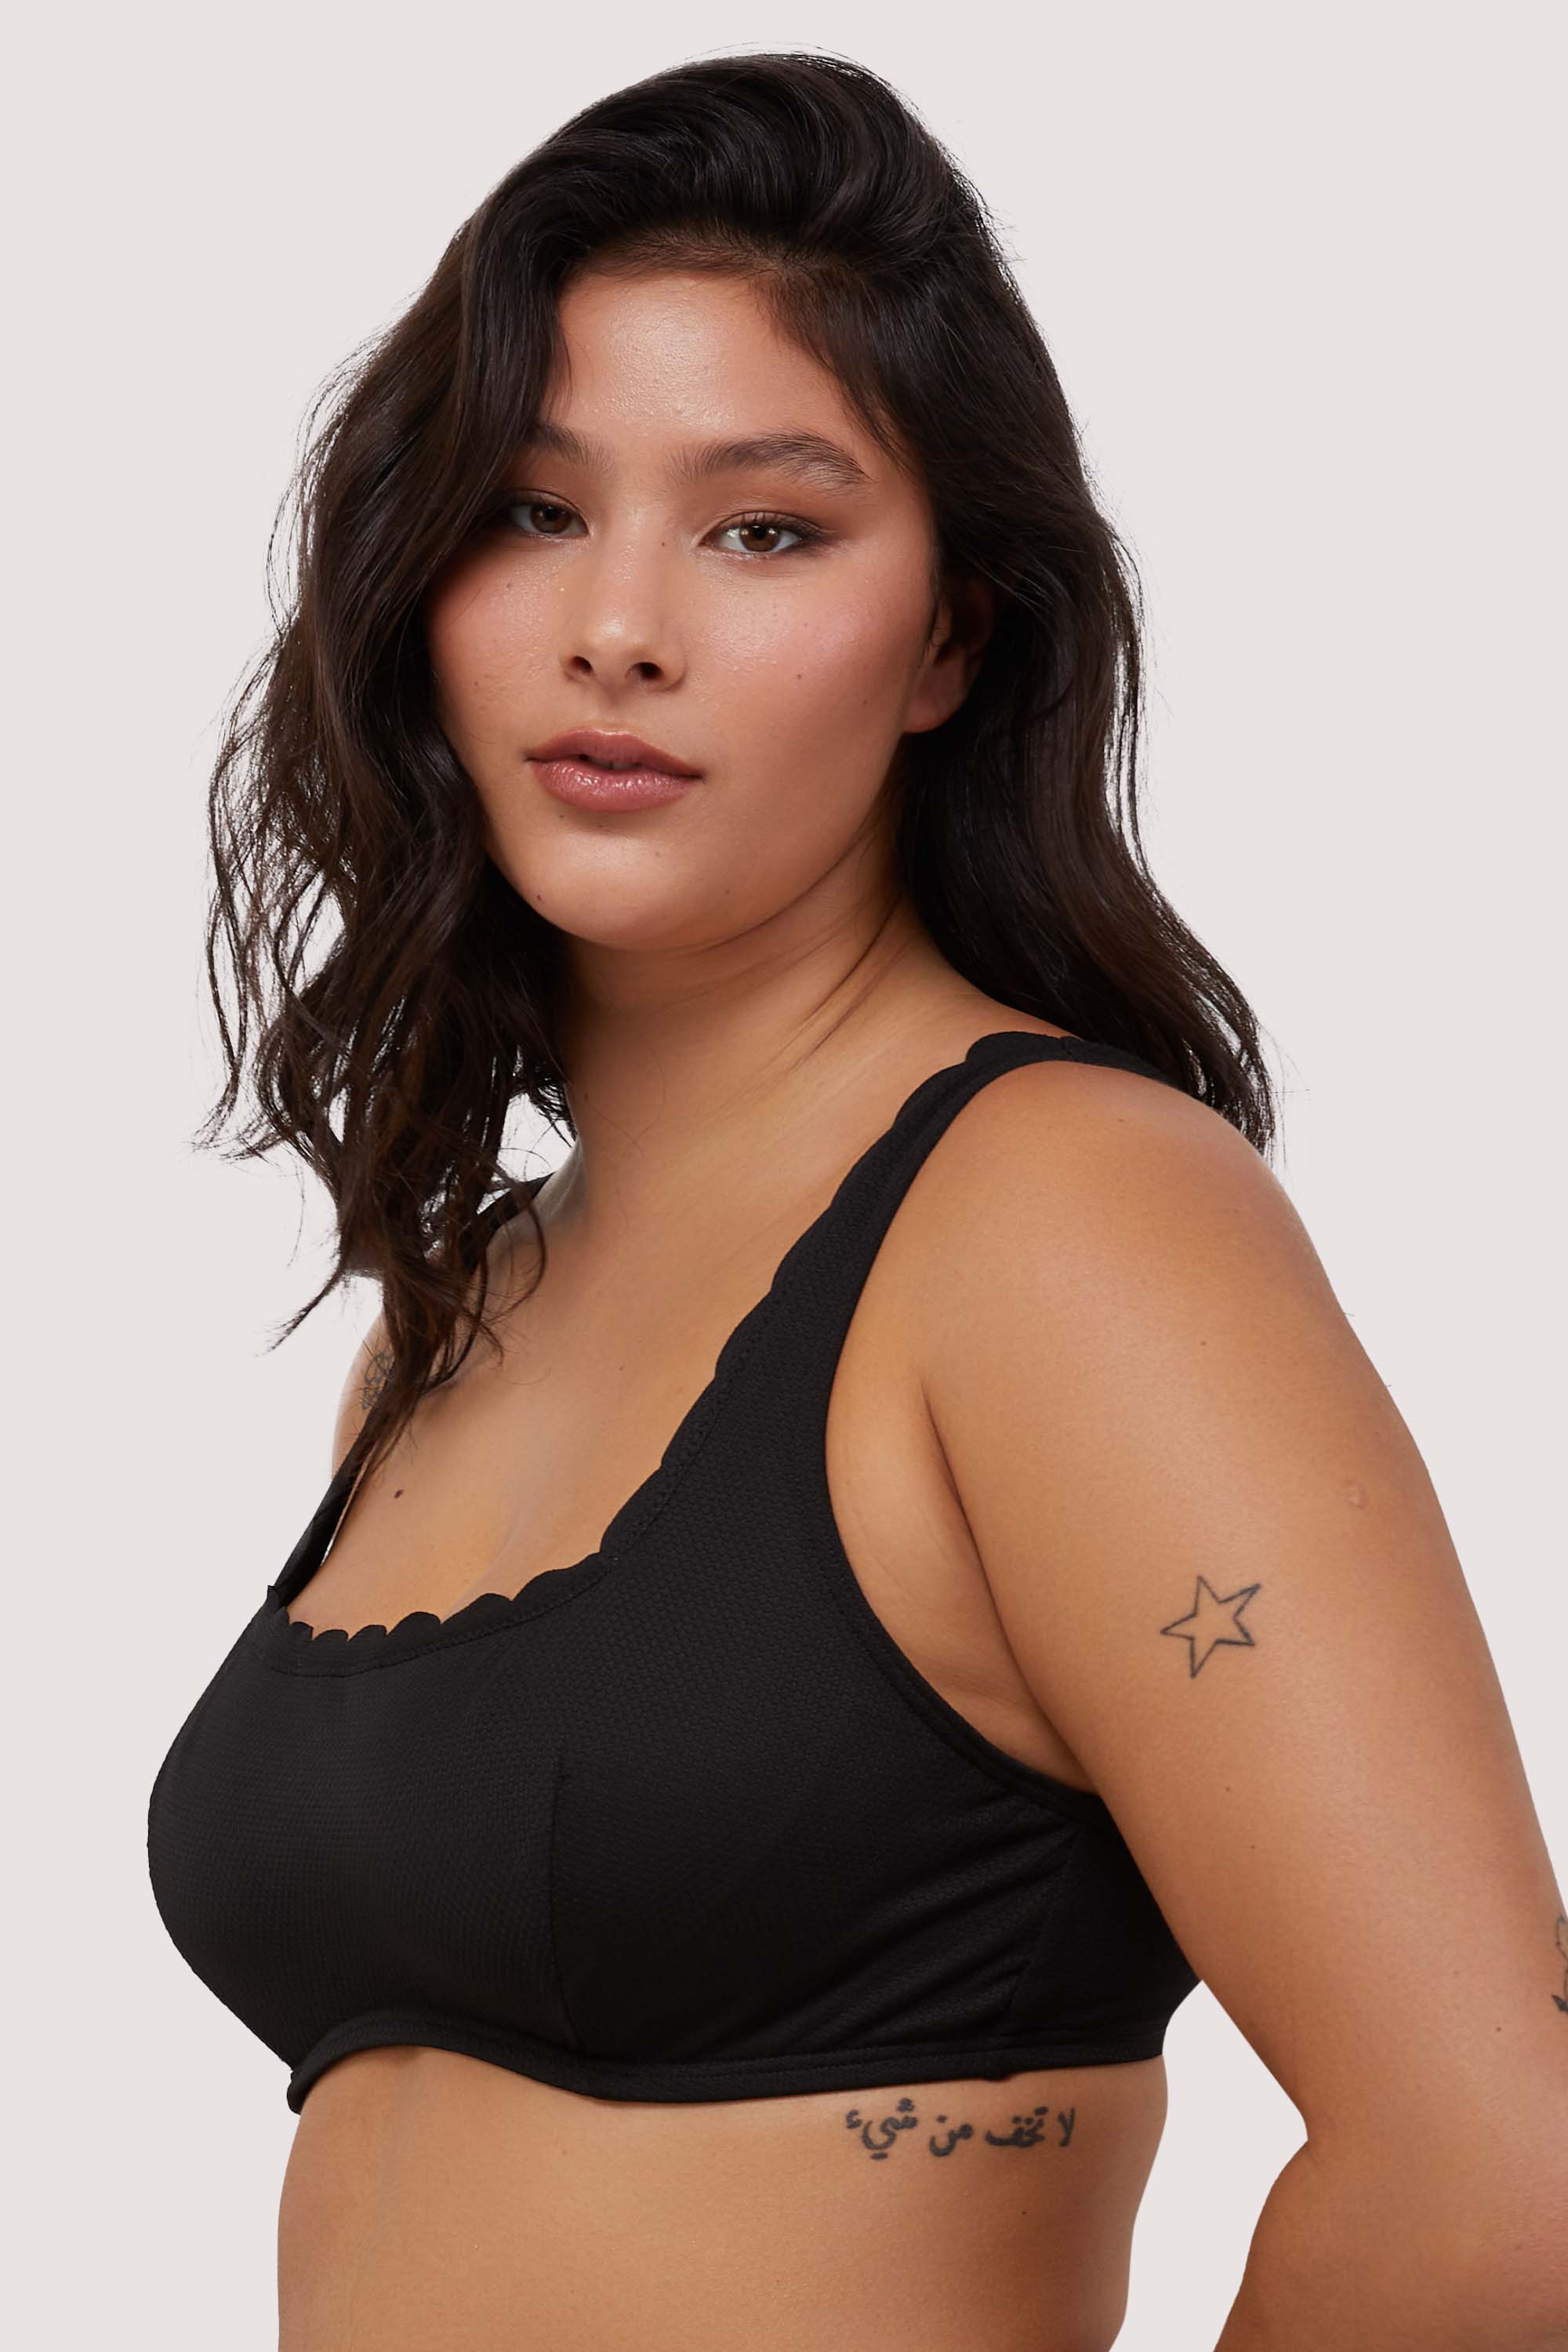 model wears black scalloped underwire balconette bikini top with thick shoulder straps